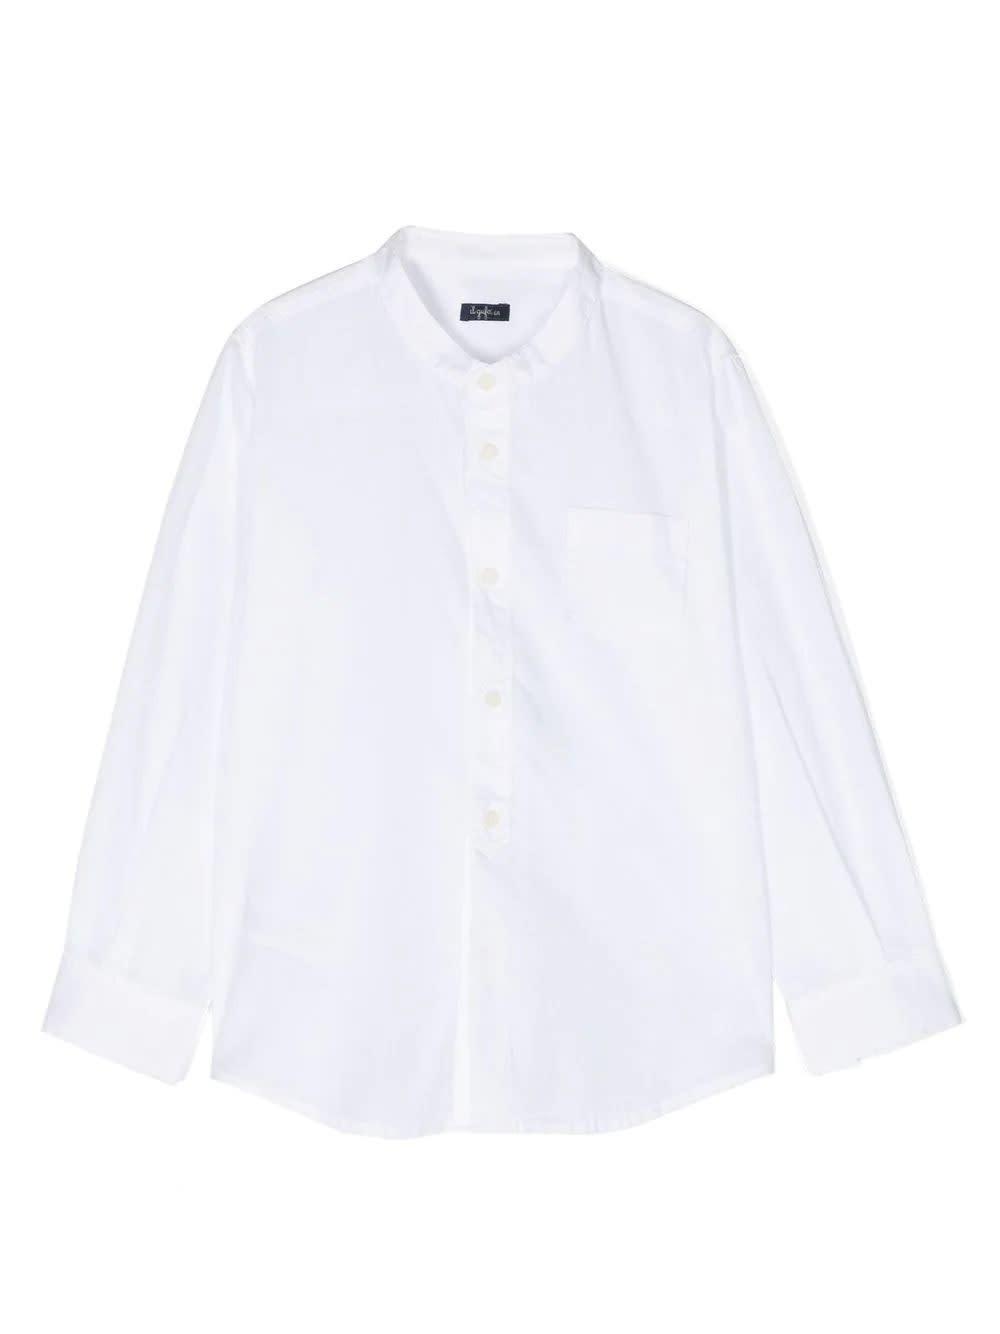 Shop Il Gufo White Cotton Shirt